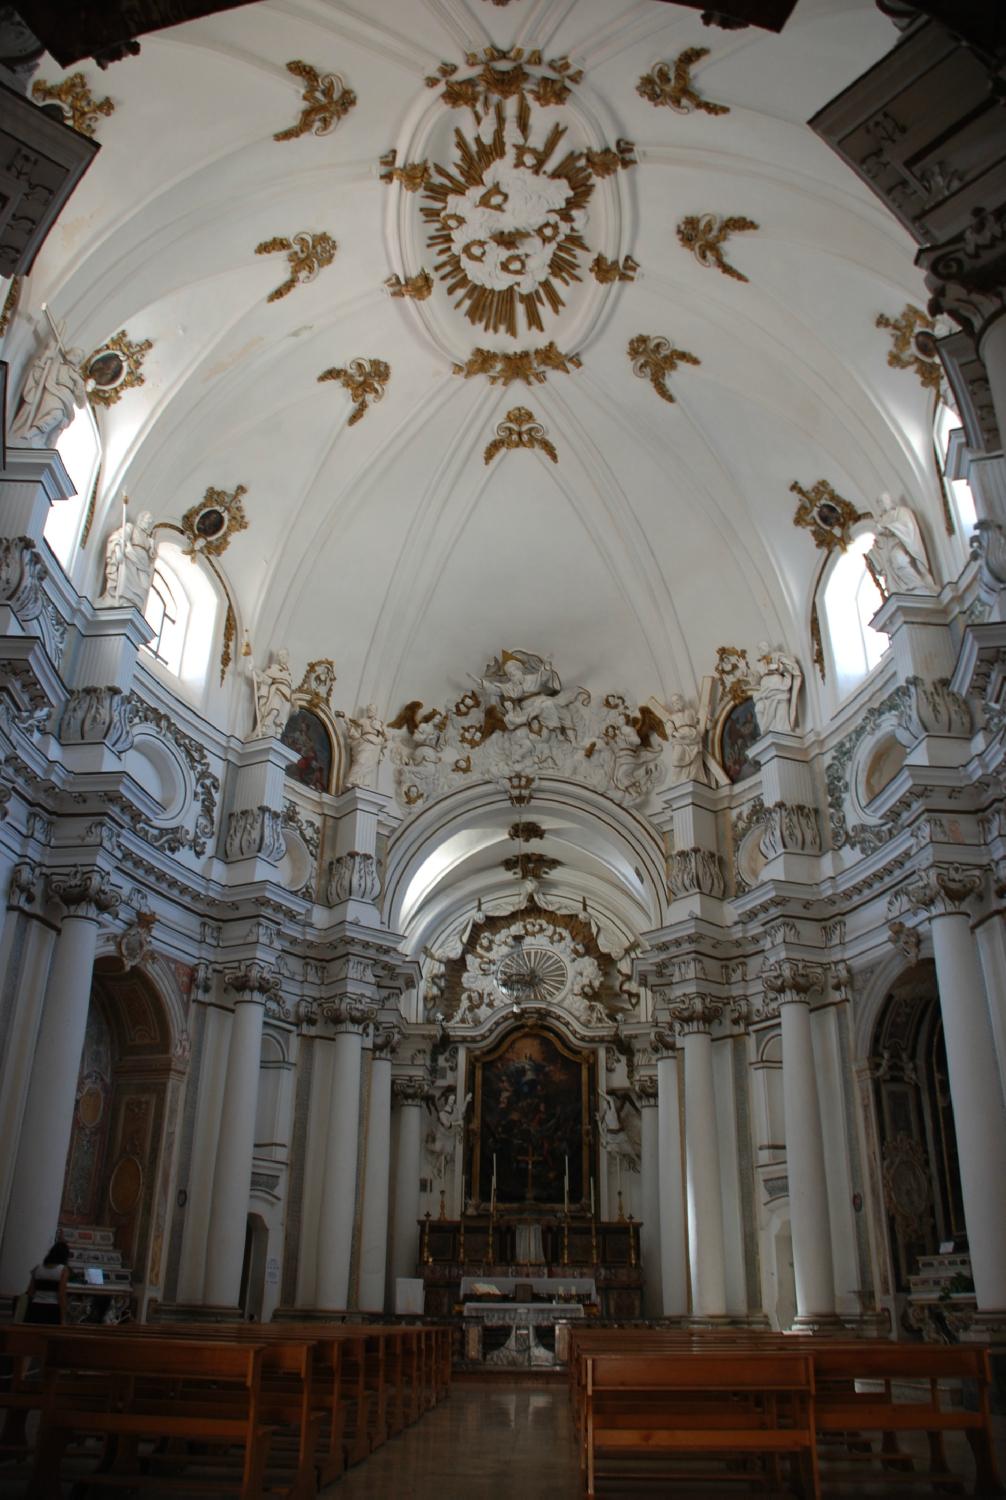 Chiesa Santa Chiara